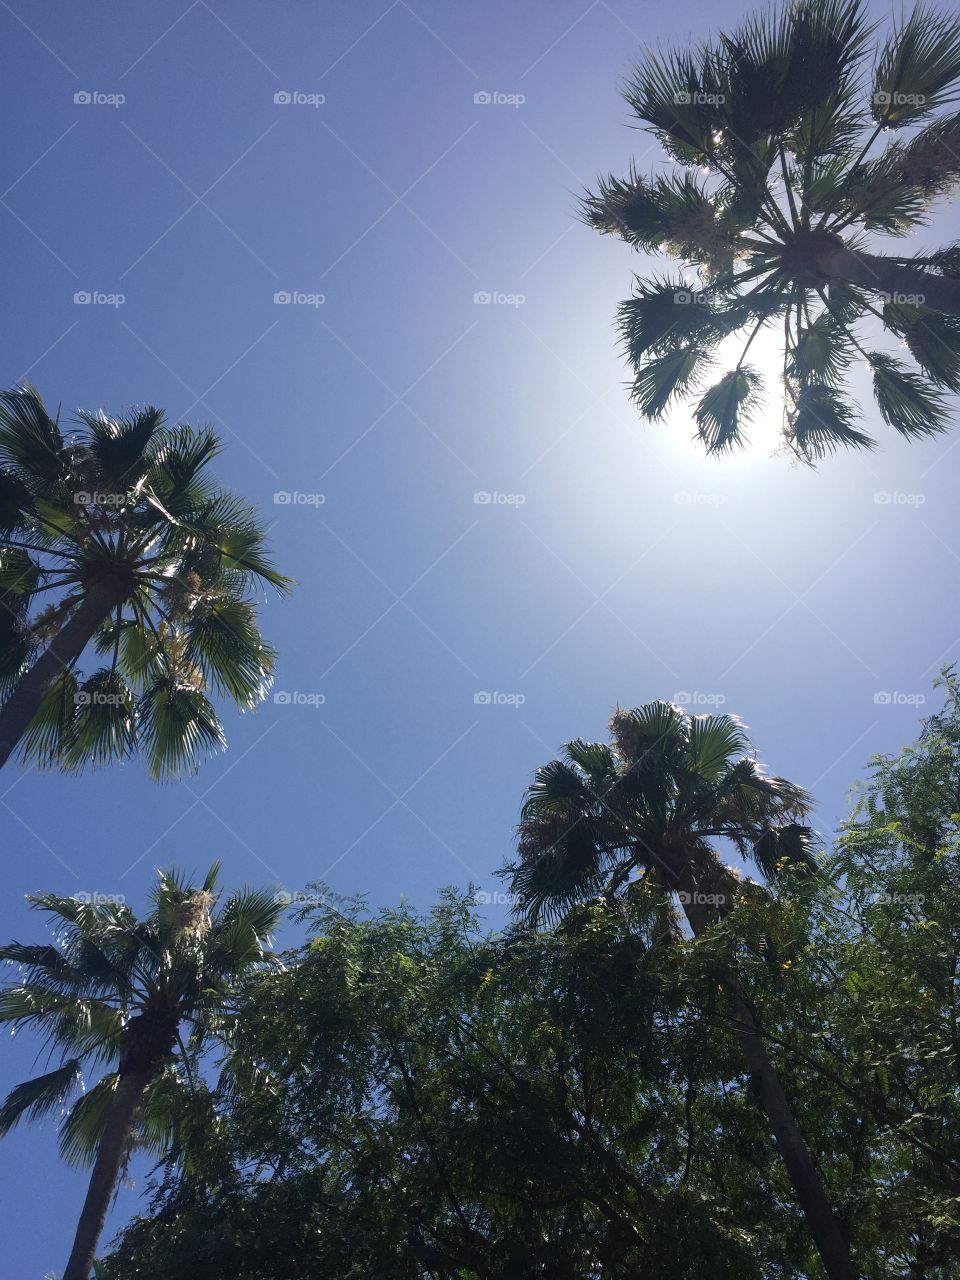 California love, sun & palm trees 